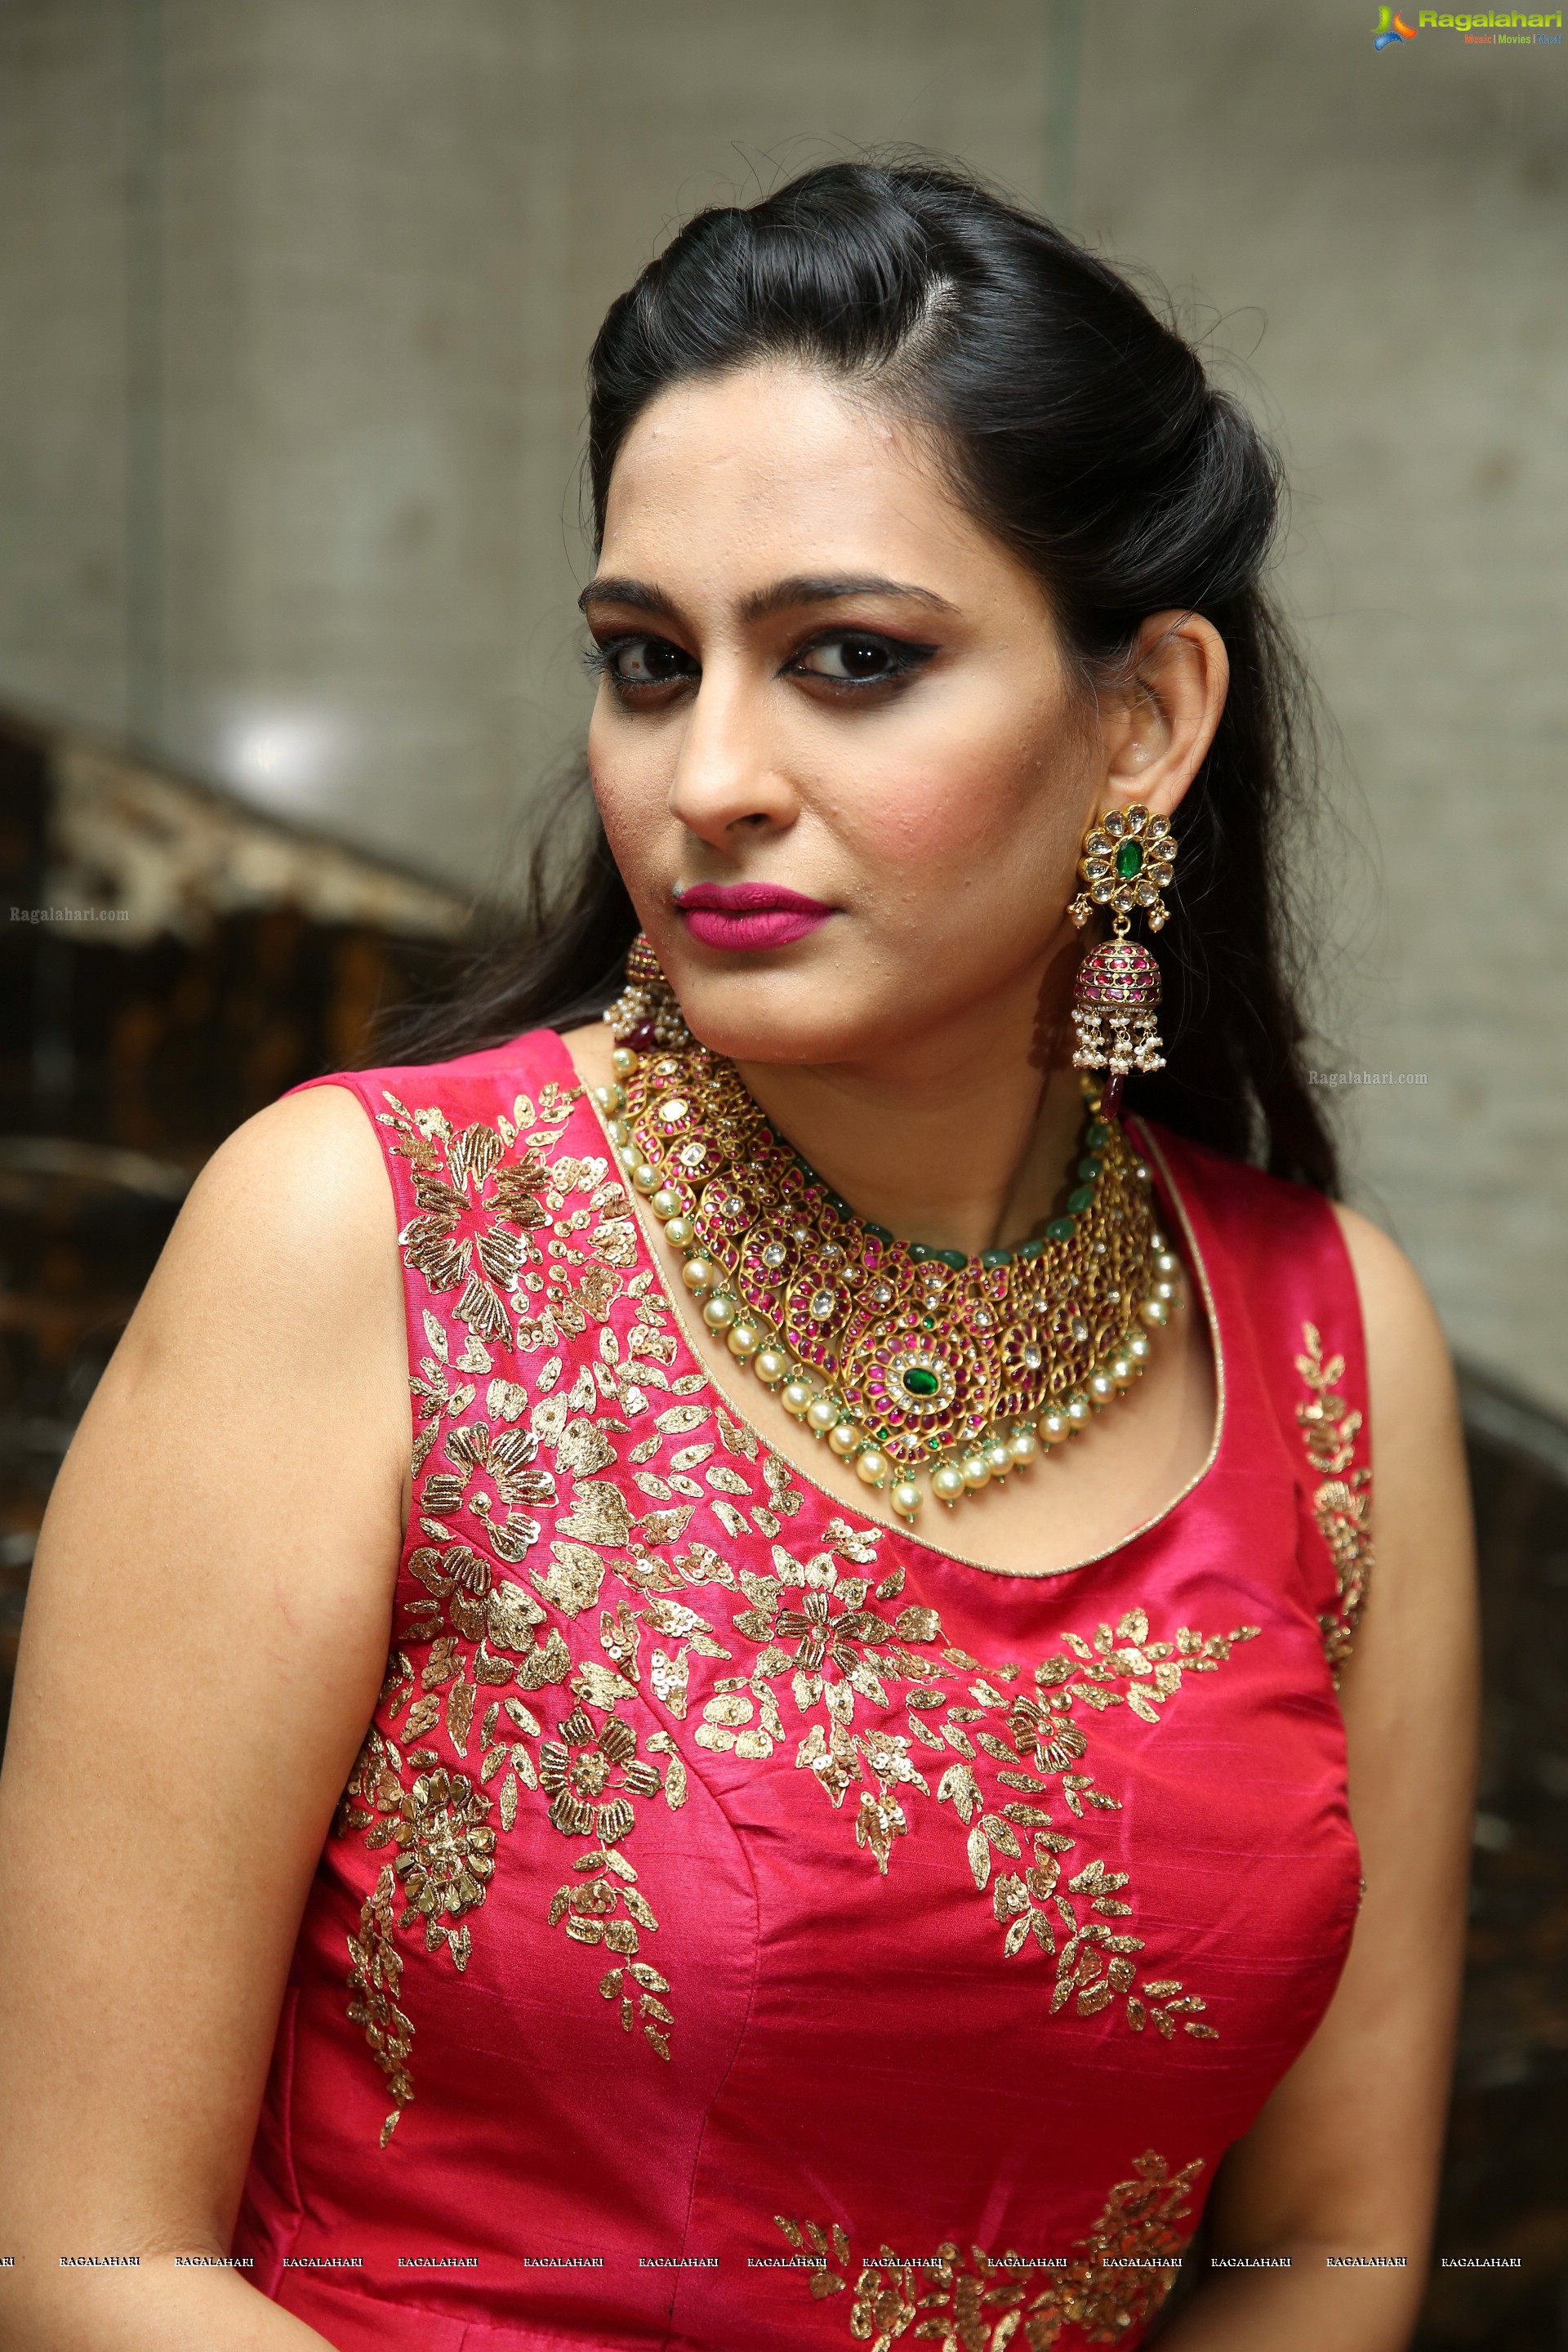 Swetha Jadhav at The Statement - A Wedding Jewellery Exhibition Curtain Raiser (High Definition Photos)